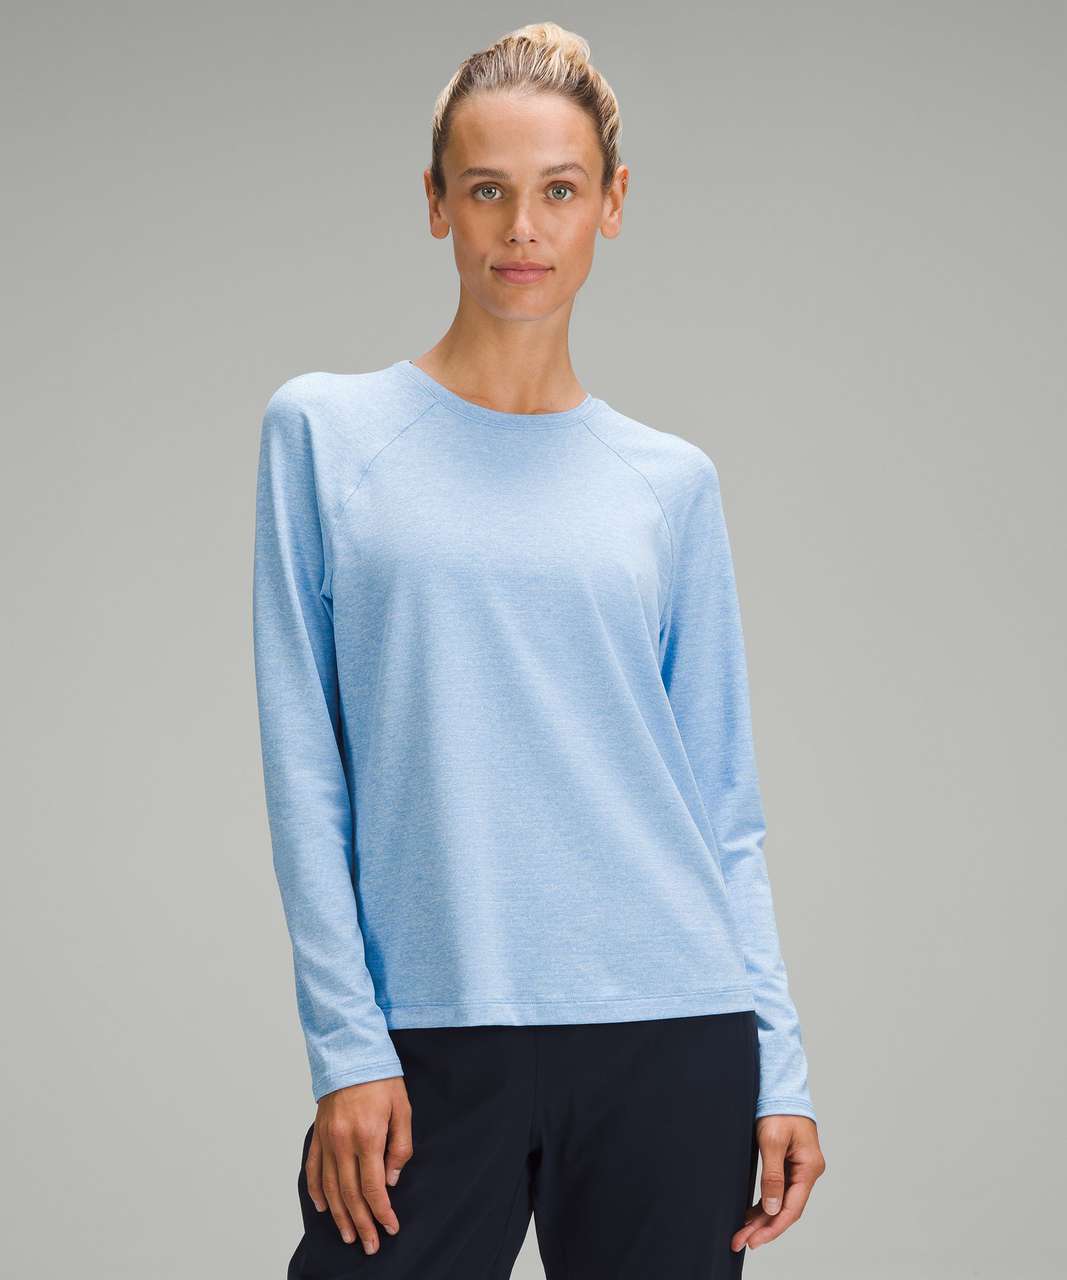 Lululemon License to Train Classic-Fit Long-Sleeve Shirt - Heathered Aero Blue